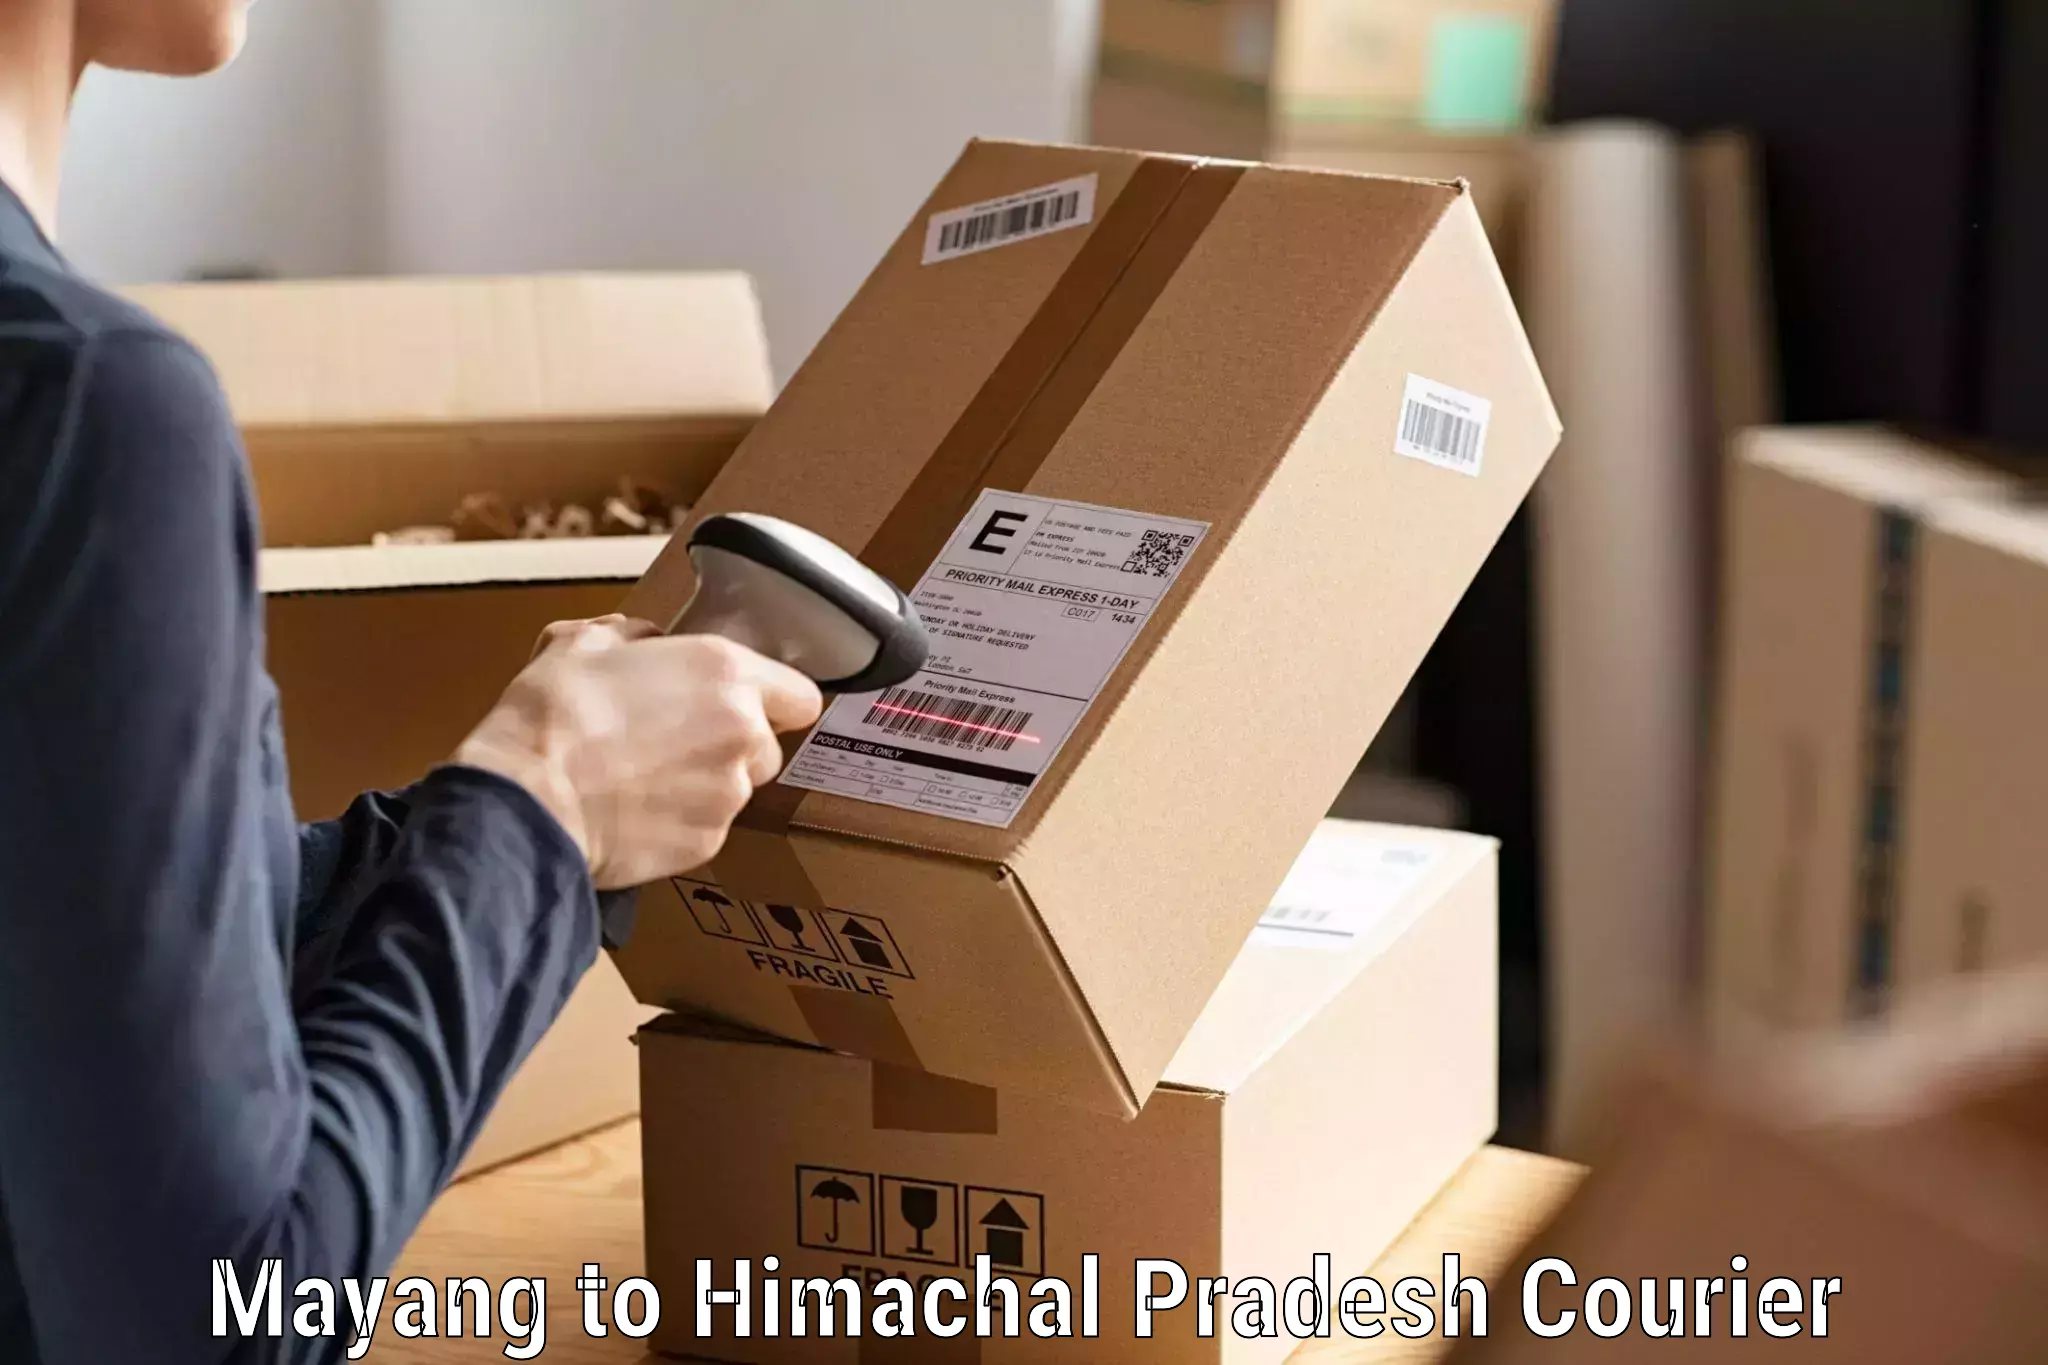 Pharmaceutical courier Mayang to Himachal Pradesh